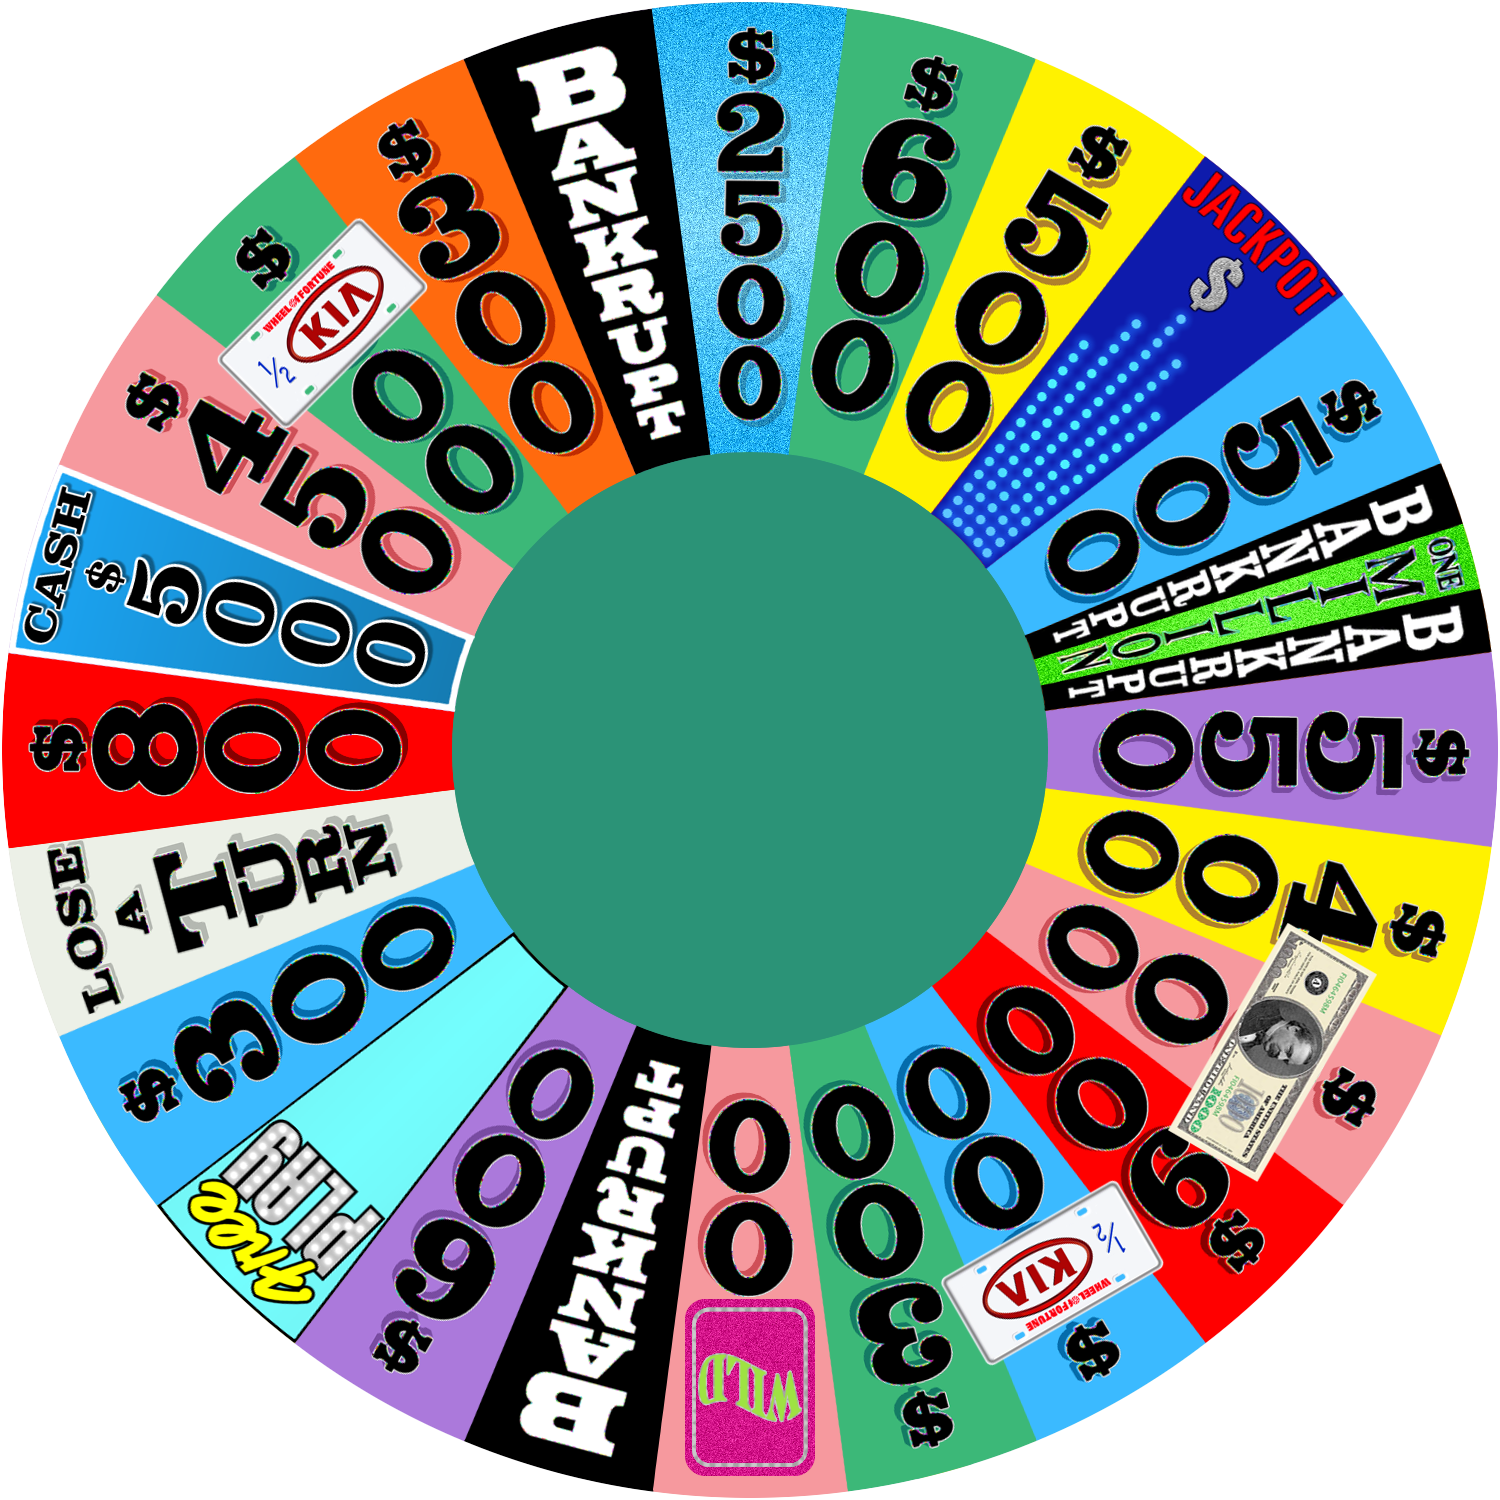 Lottery Experience Wheel - 2012 - Round 1 by wheelgenius